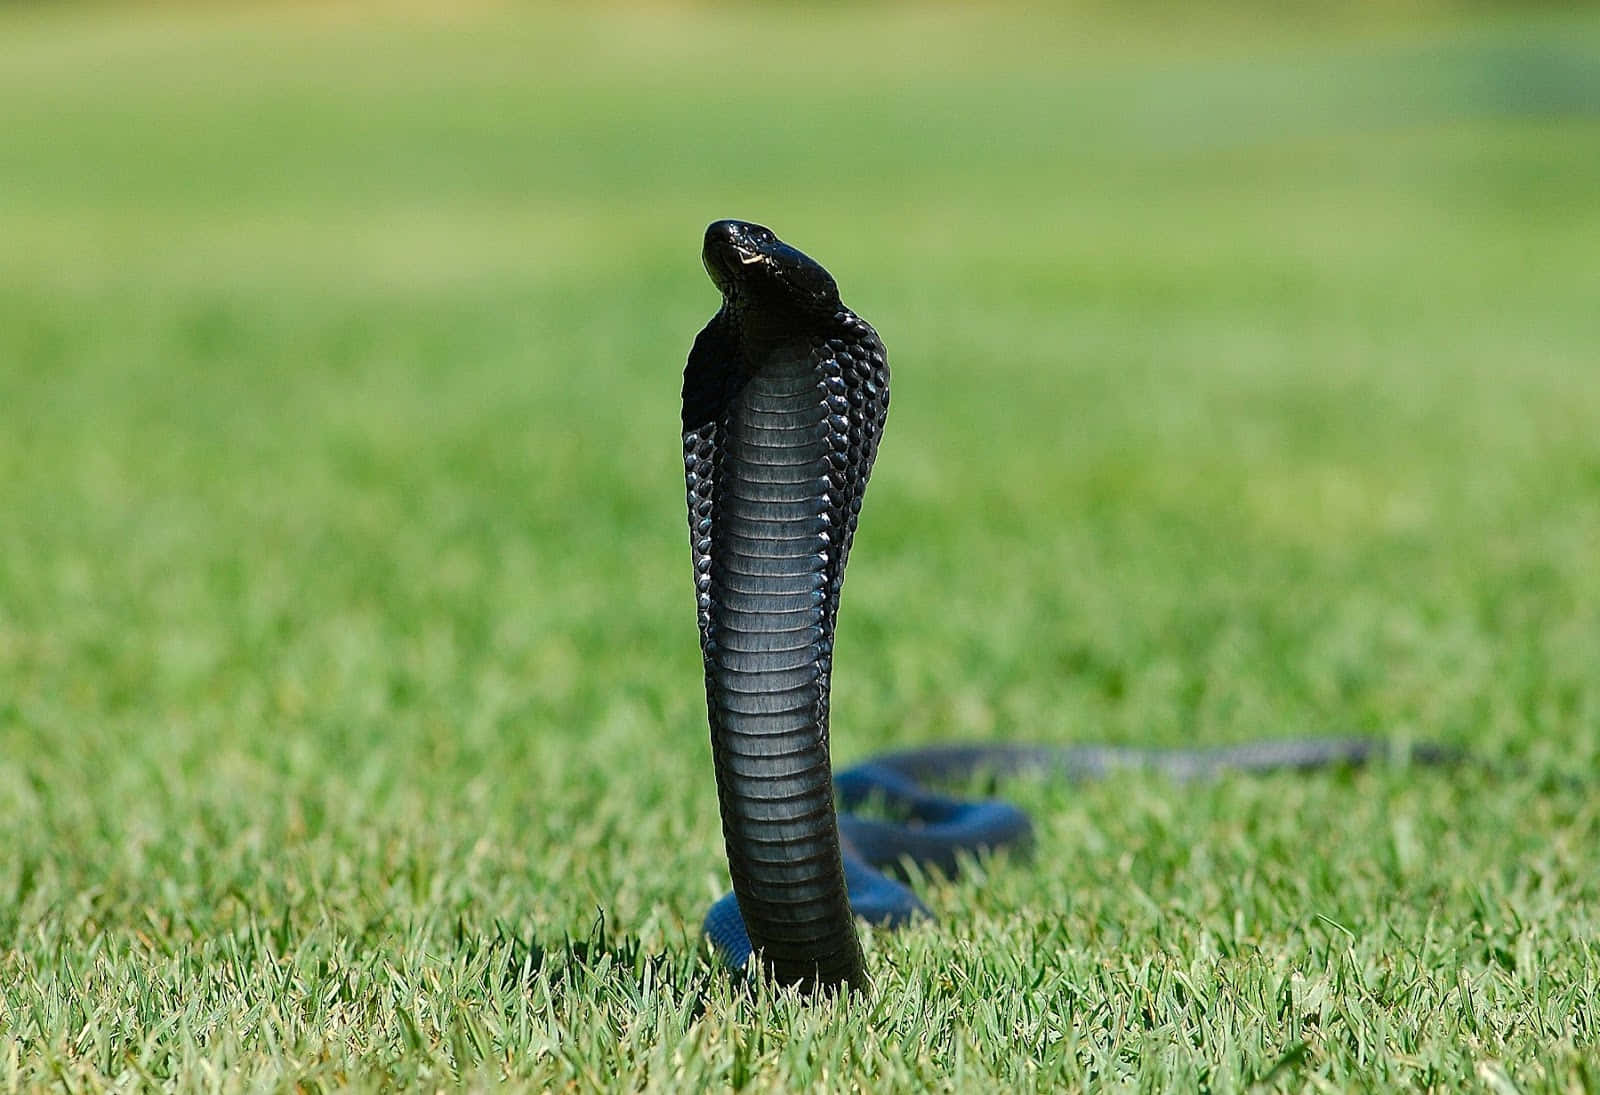 The Dreaded King Cobra